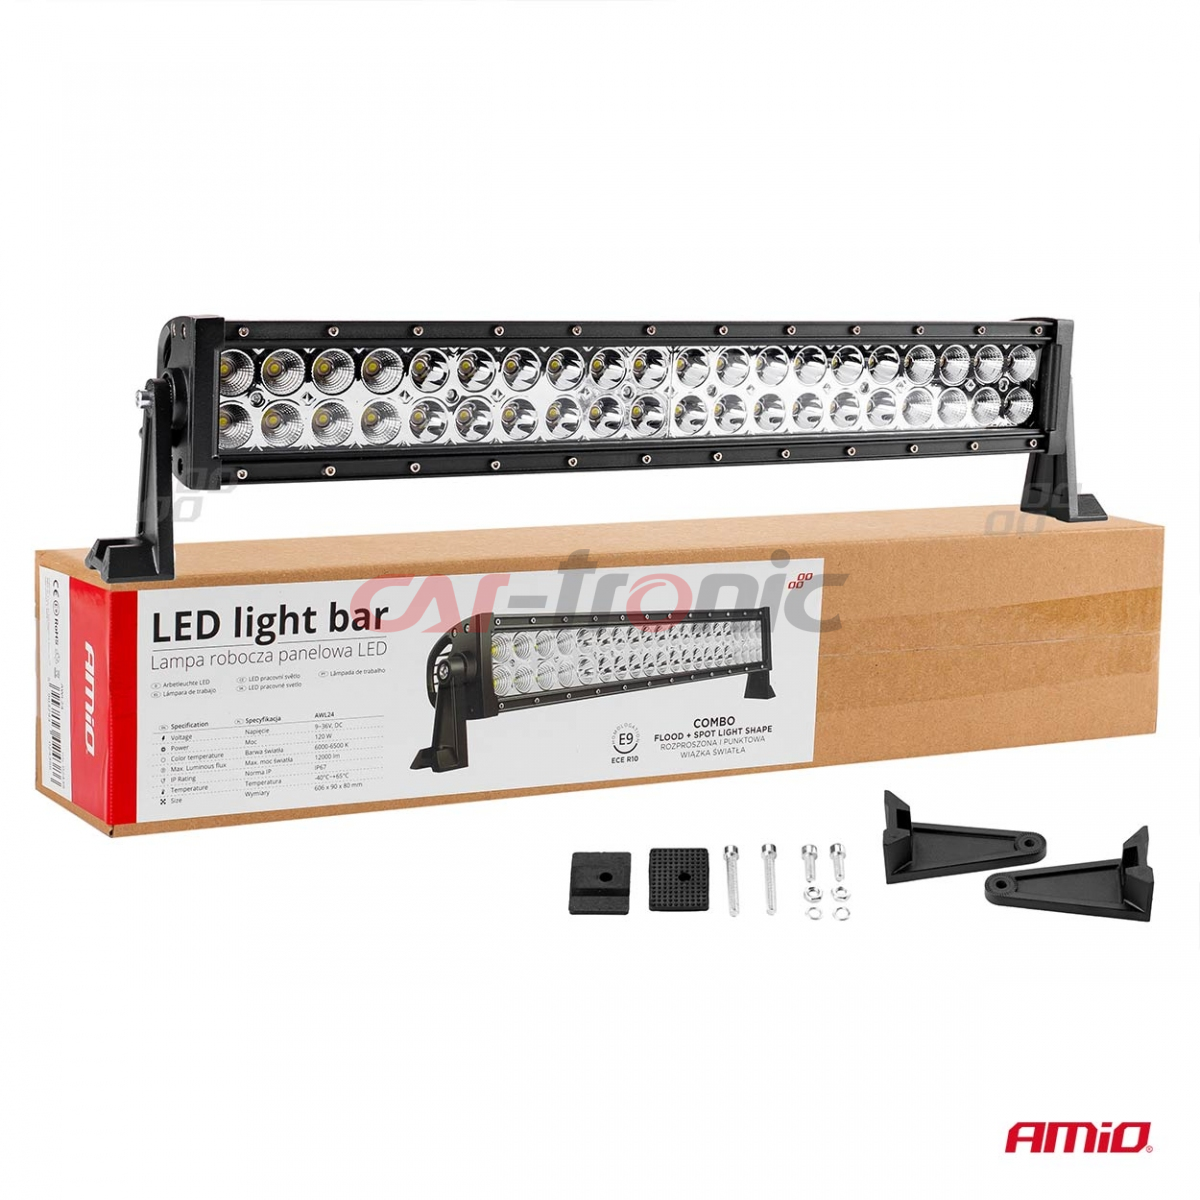 Lampa robocza panelowa LED BAR prosta 60 cm 9-36V AMIO-02438 AWL24